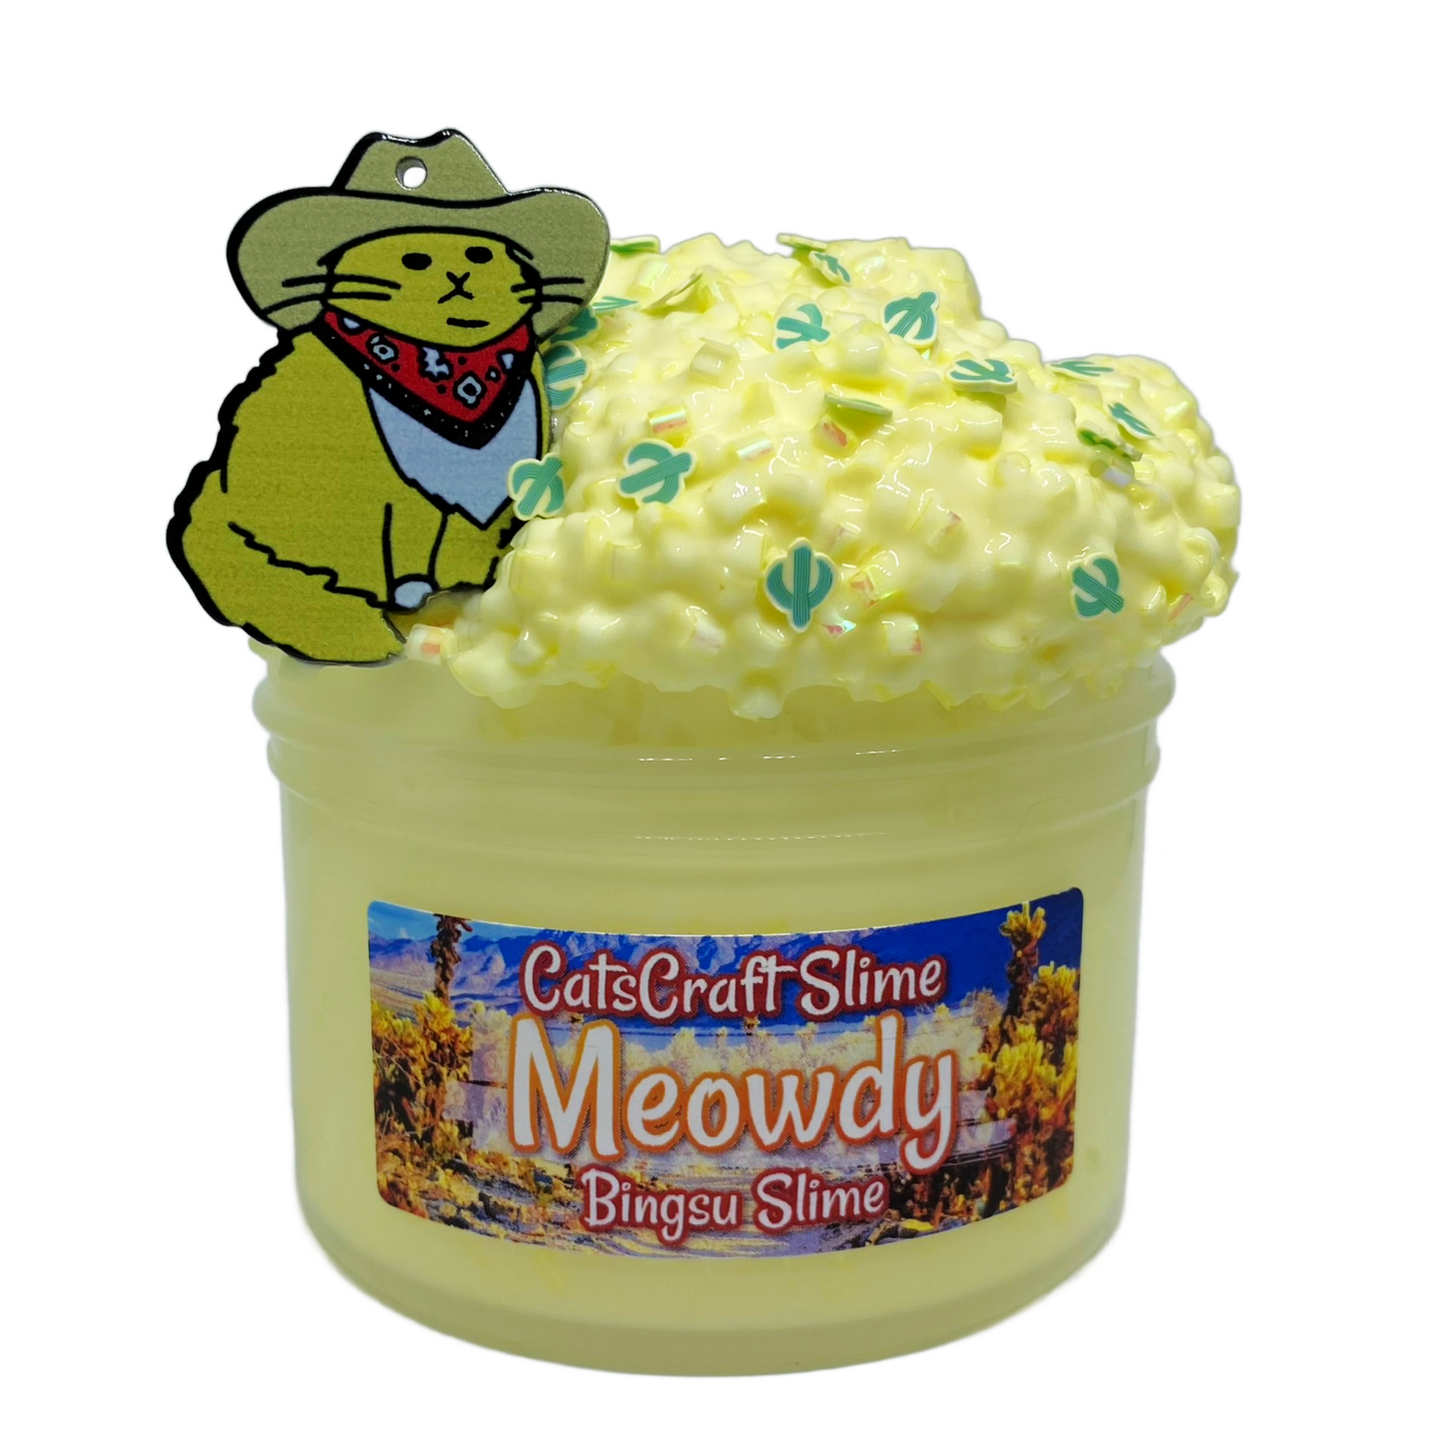 White Glue Bingsu Slime "Meowdy" SCENTED bingsu bead crunchy ASMR With Cat Charm